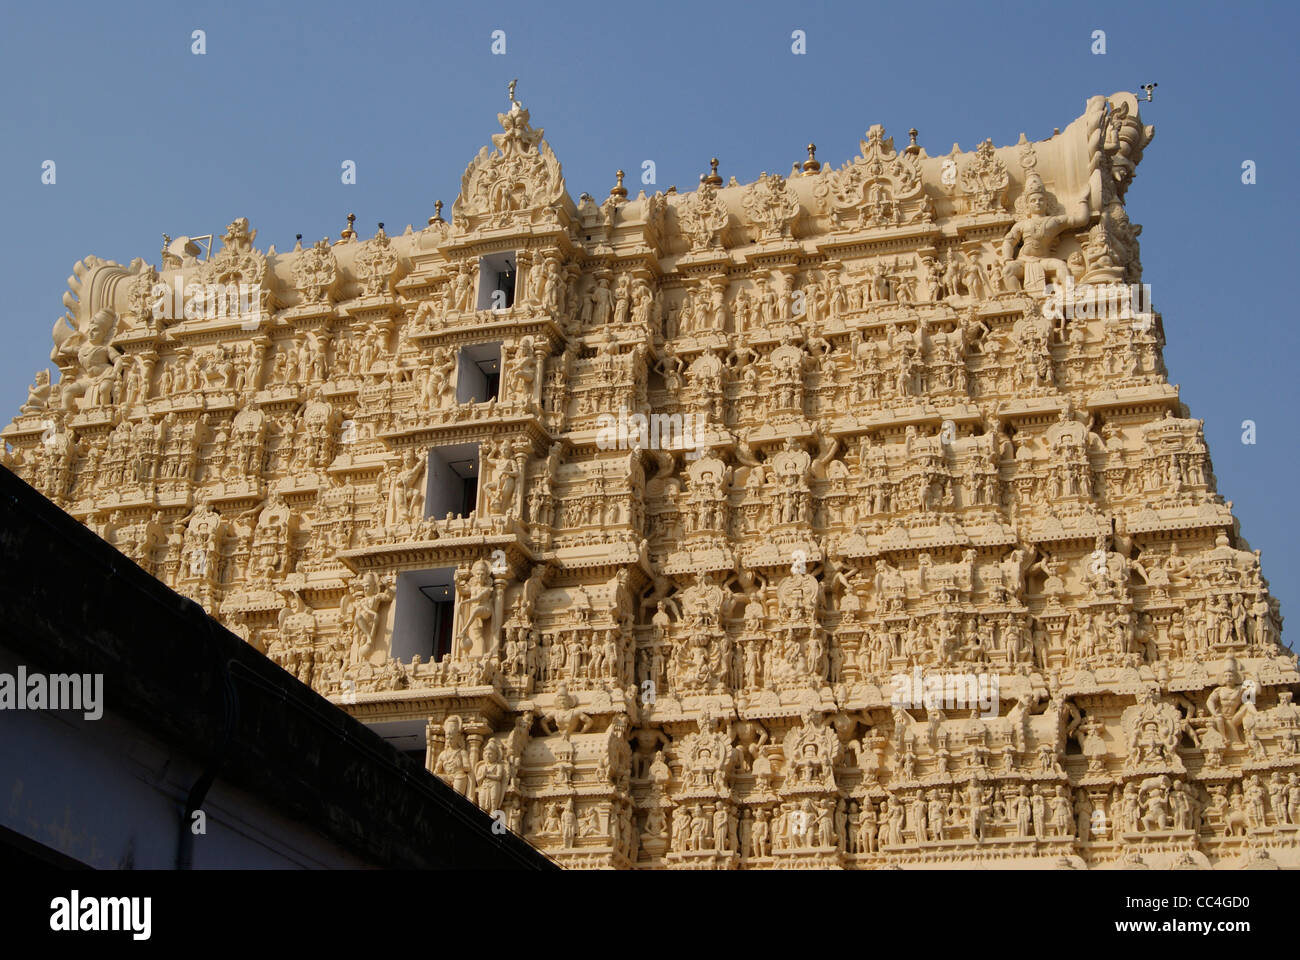 Beauty of Ancient Design & sculpture regarding Hindu beliefs marked in Sri Padmanabhaswamy Temple.(Richest Temple in the World ) Stock Photo